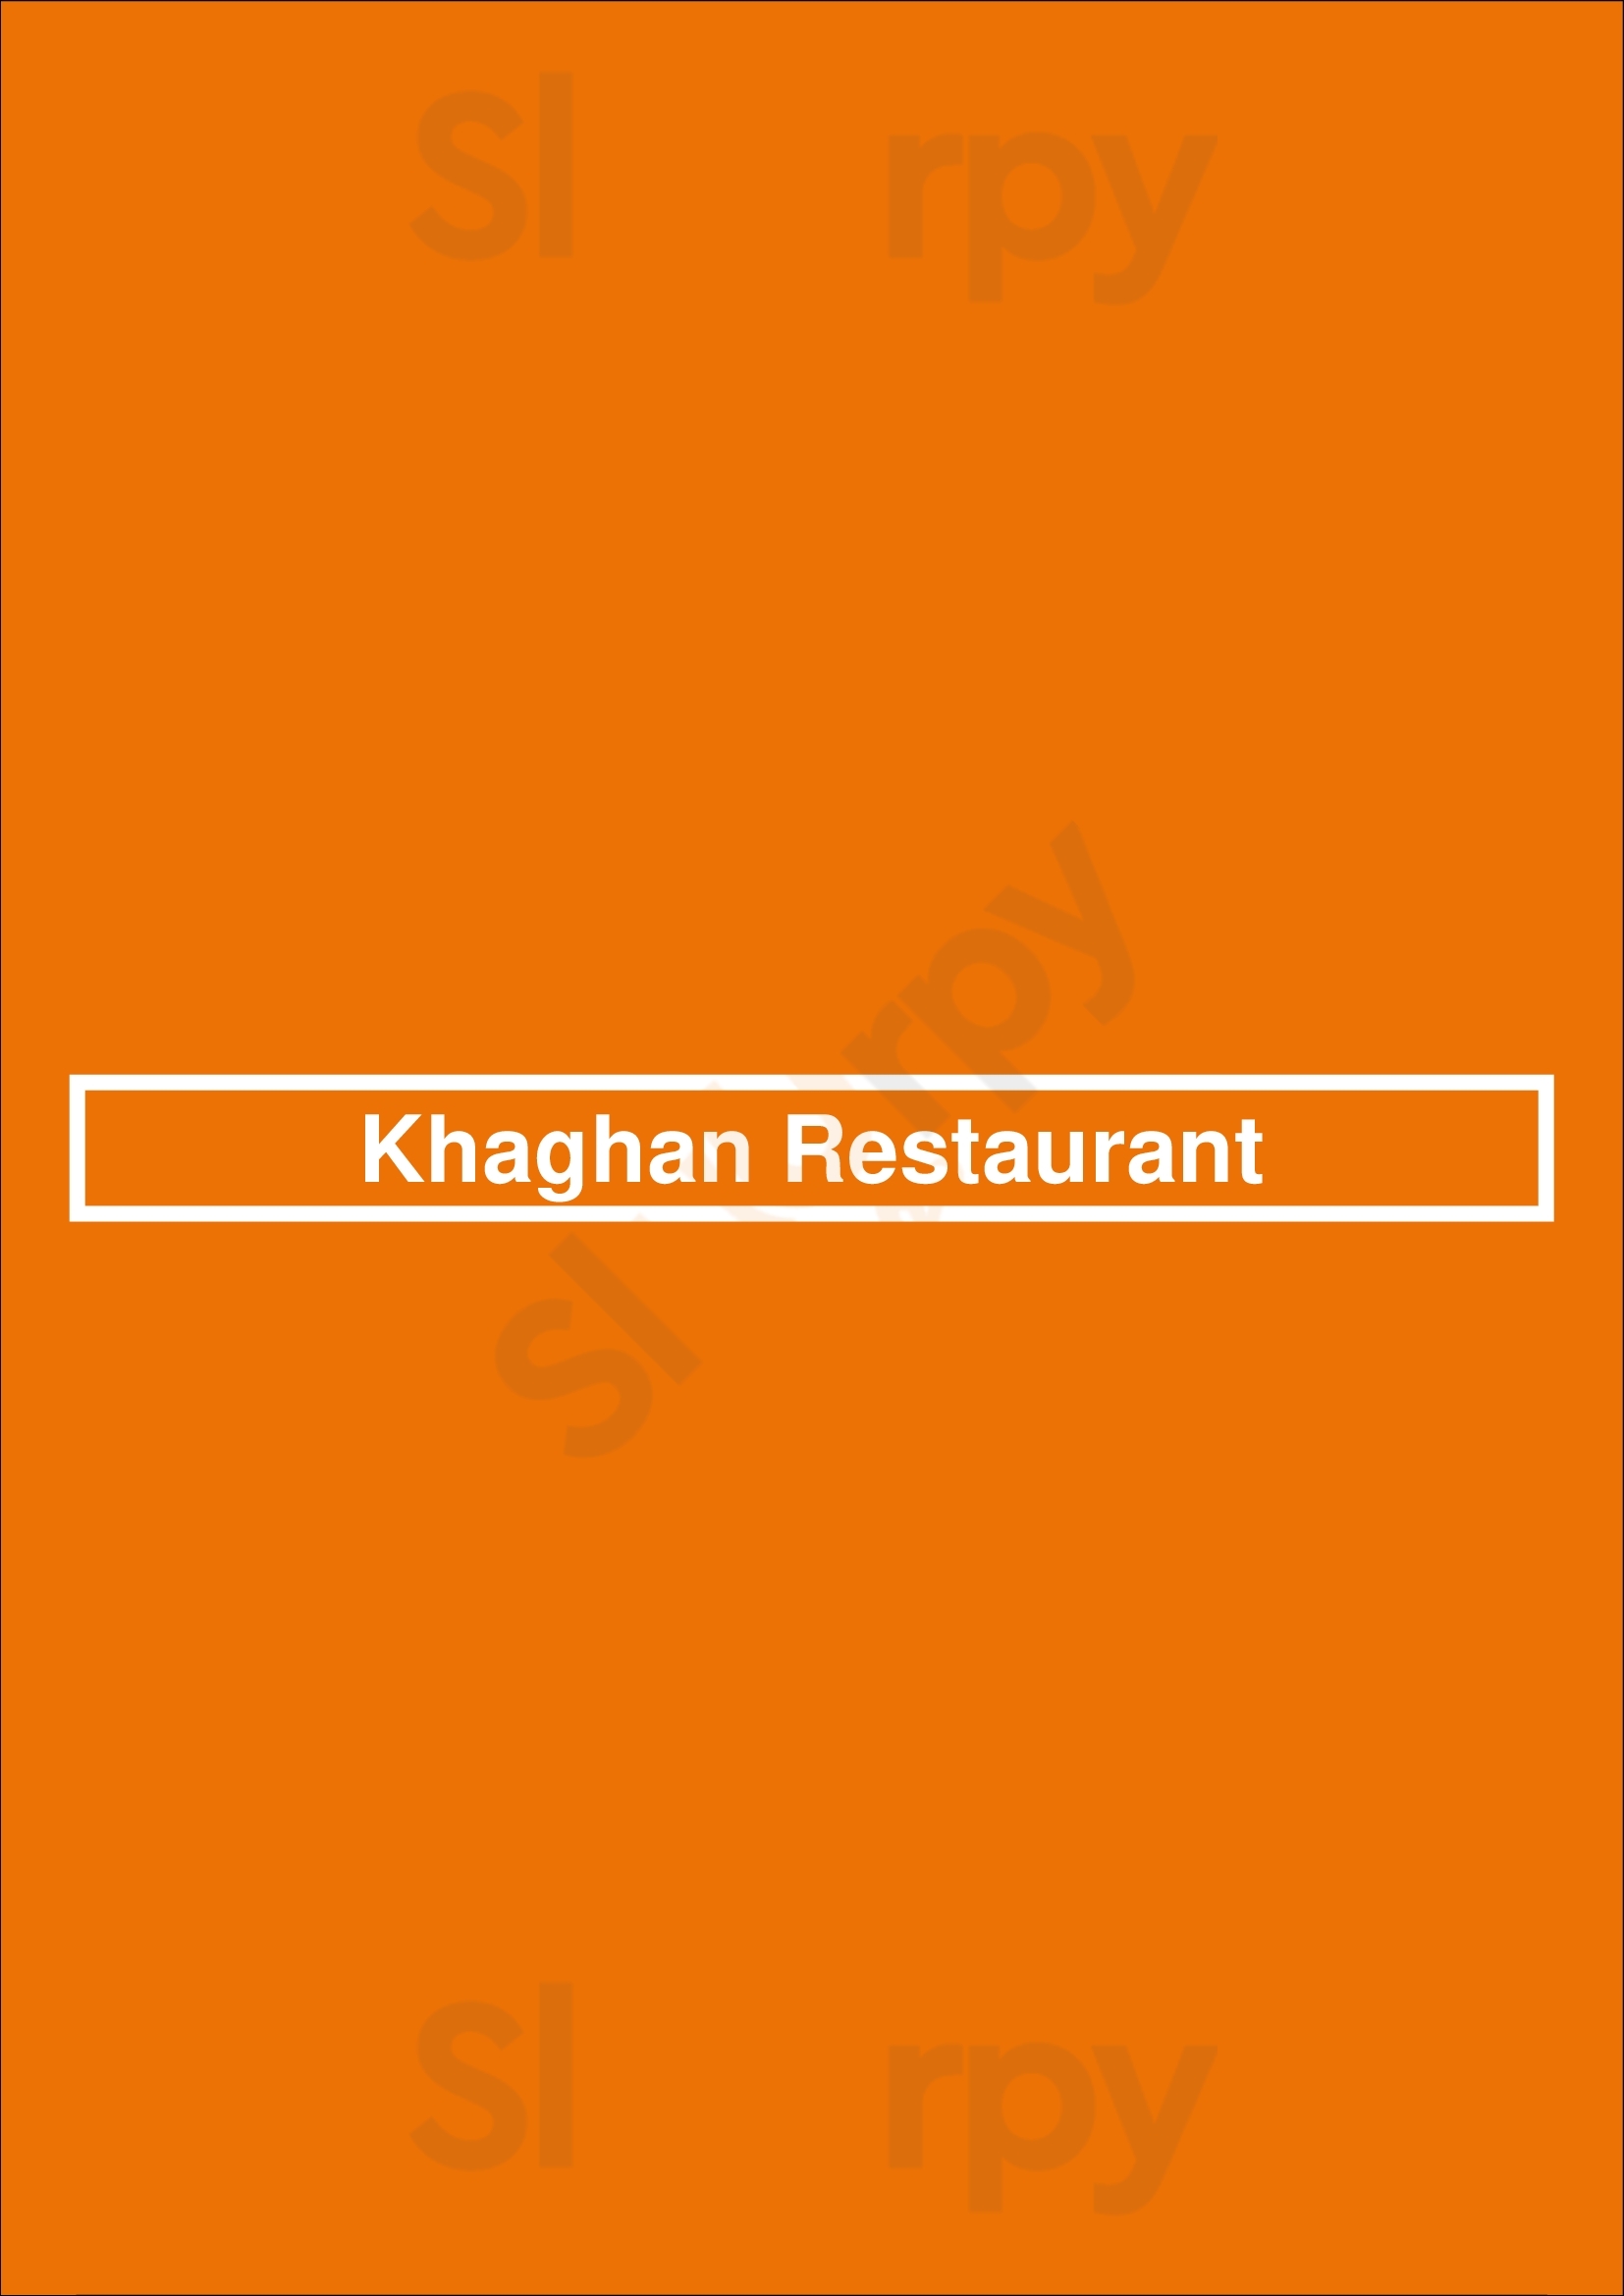 Khaghan Restaurant Vancouver Menu - 1